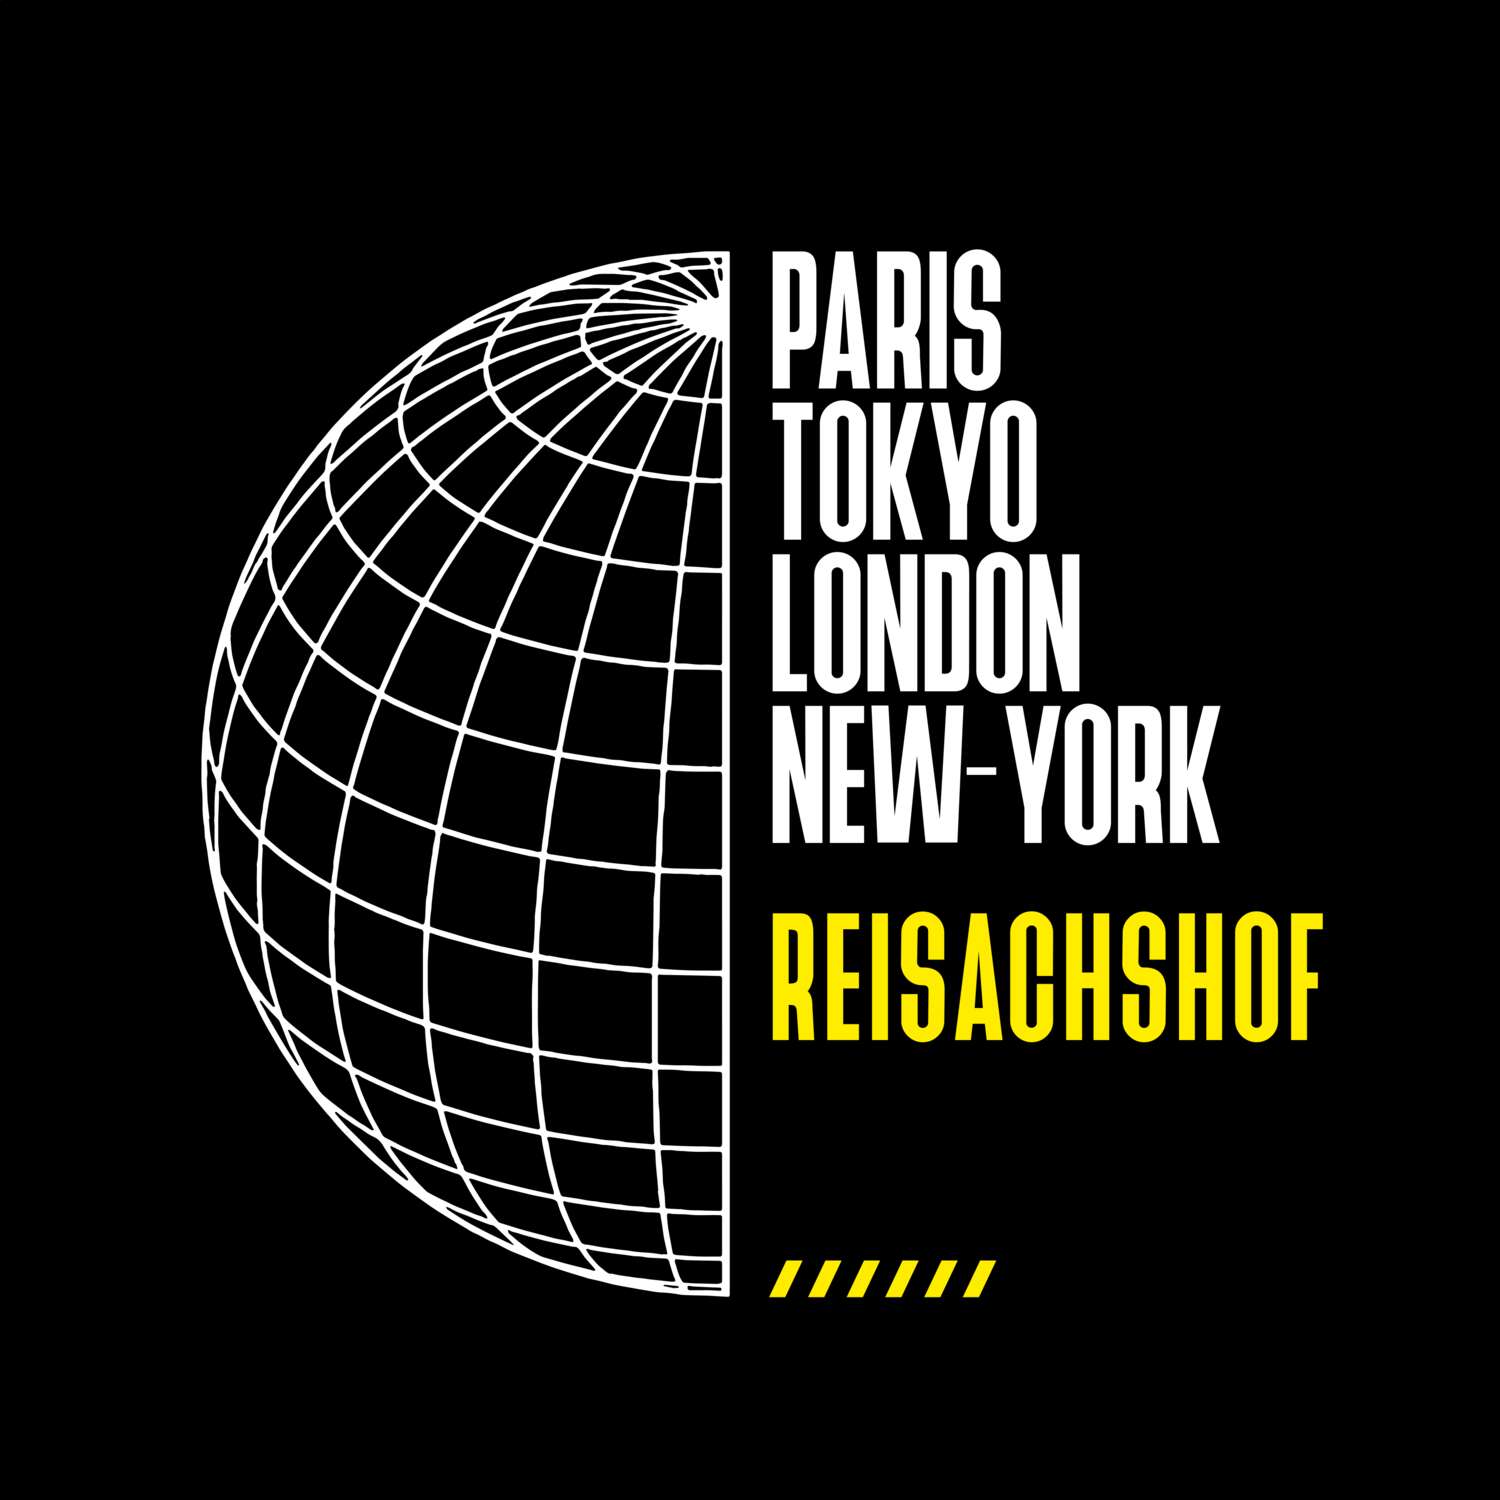 Reisachshof T-Shirt »Paris Tokyo London«